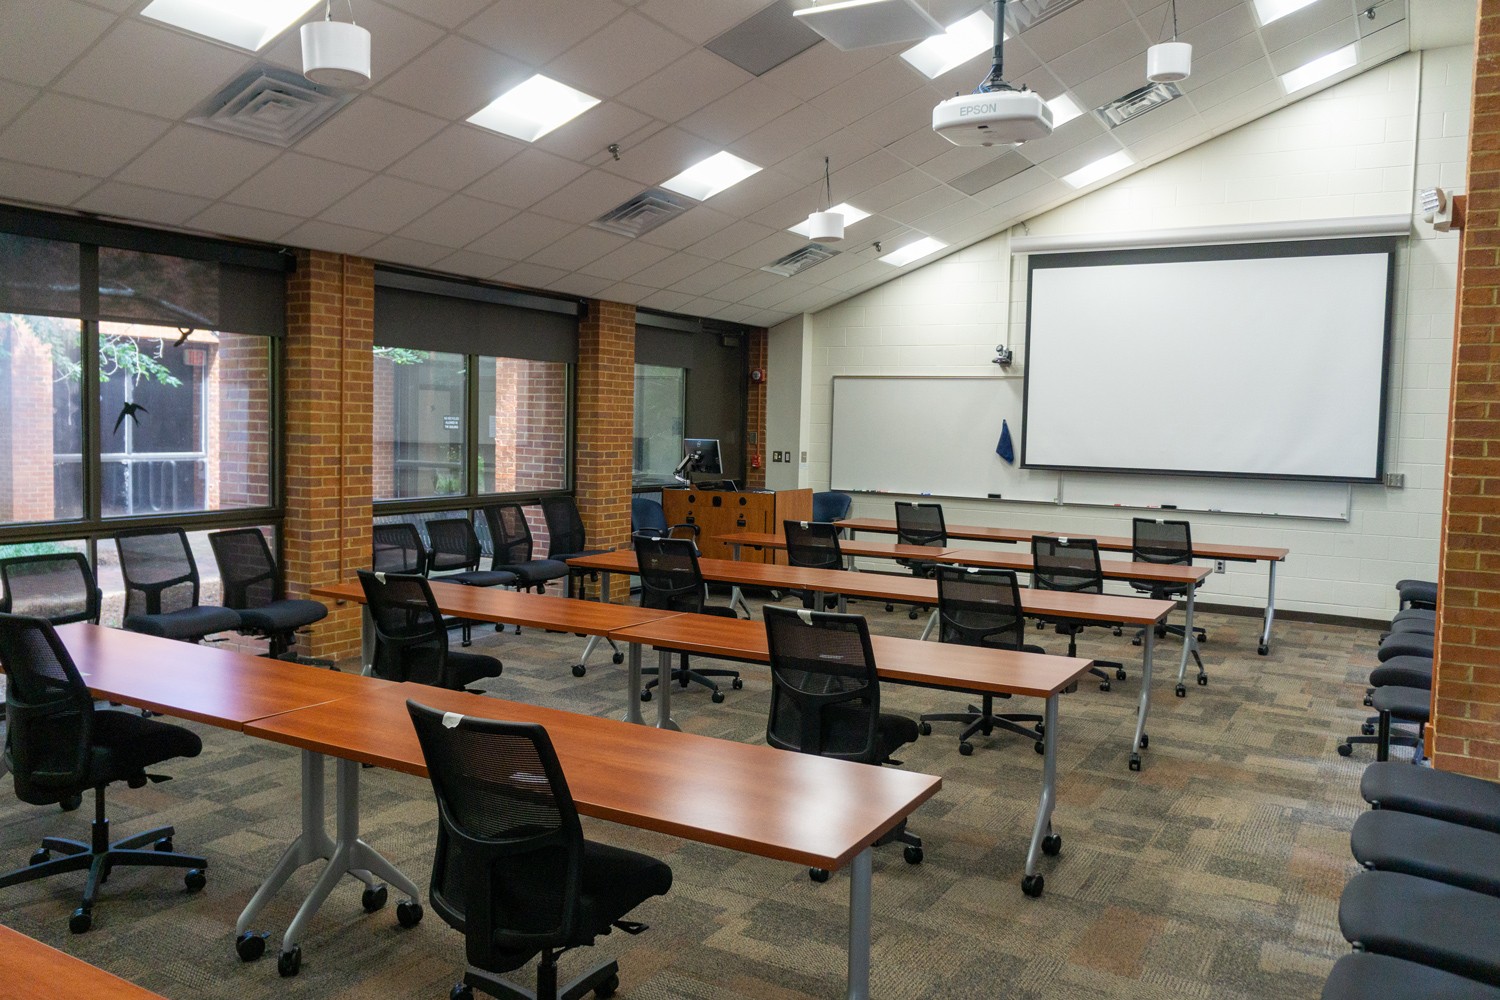 image of classroom configuration